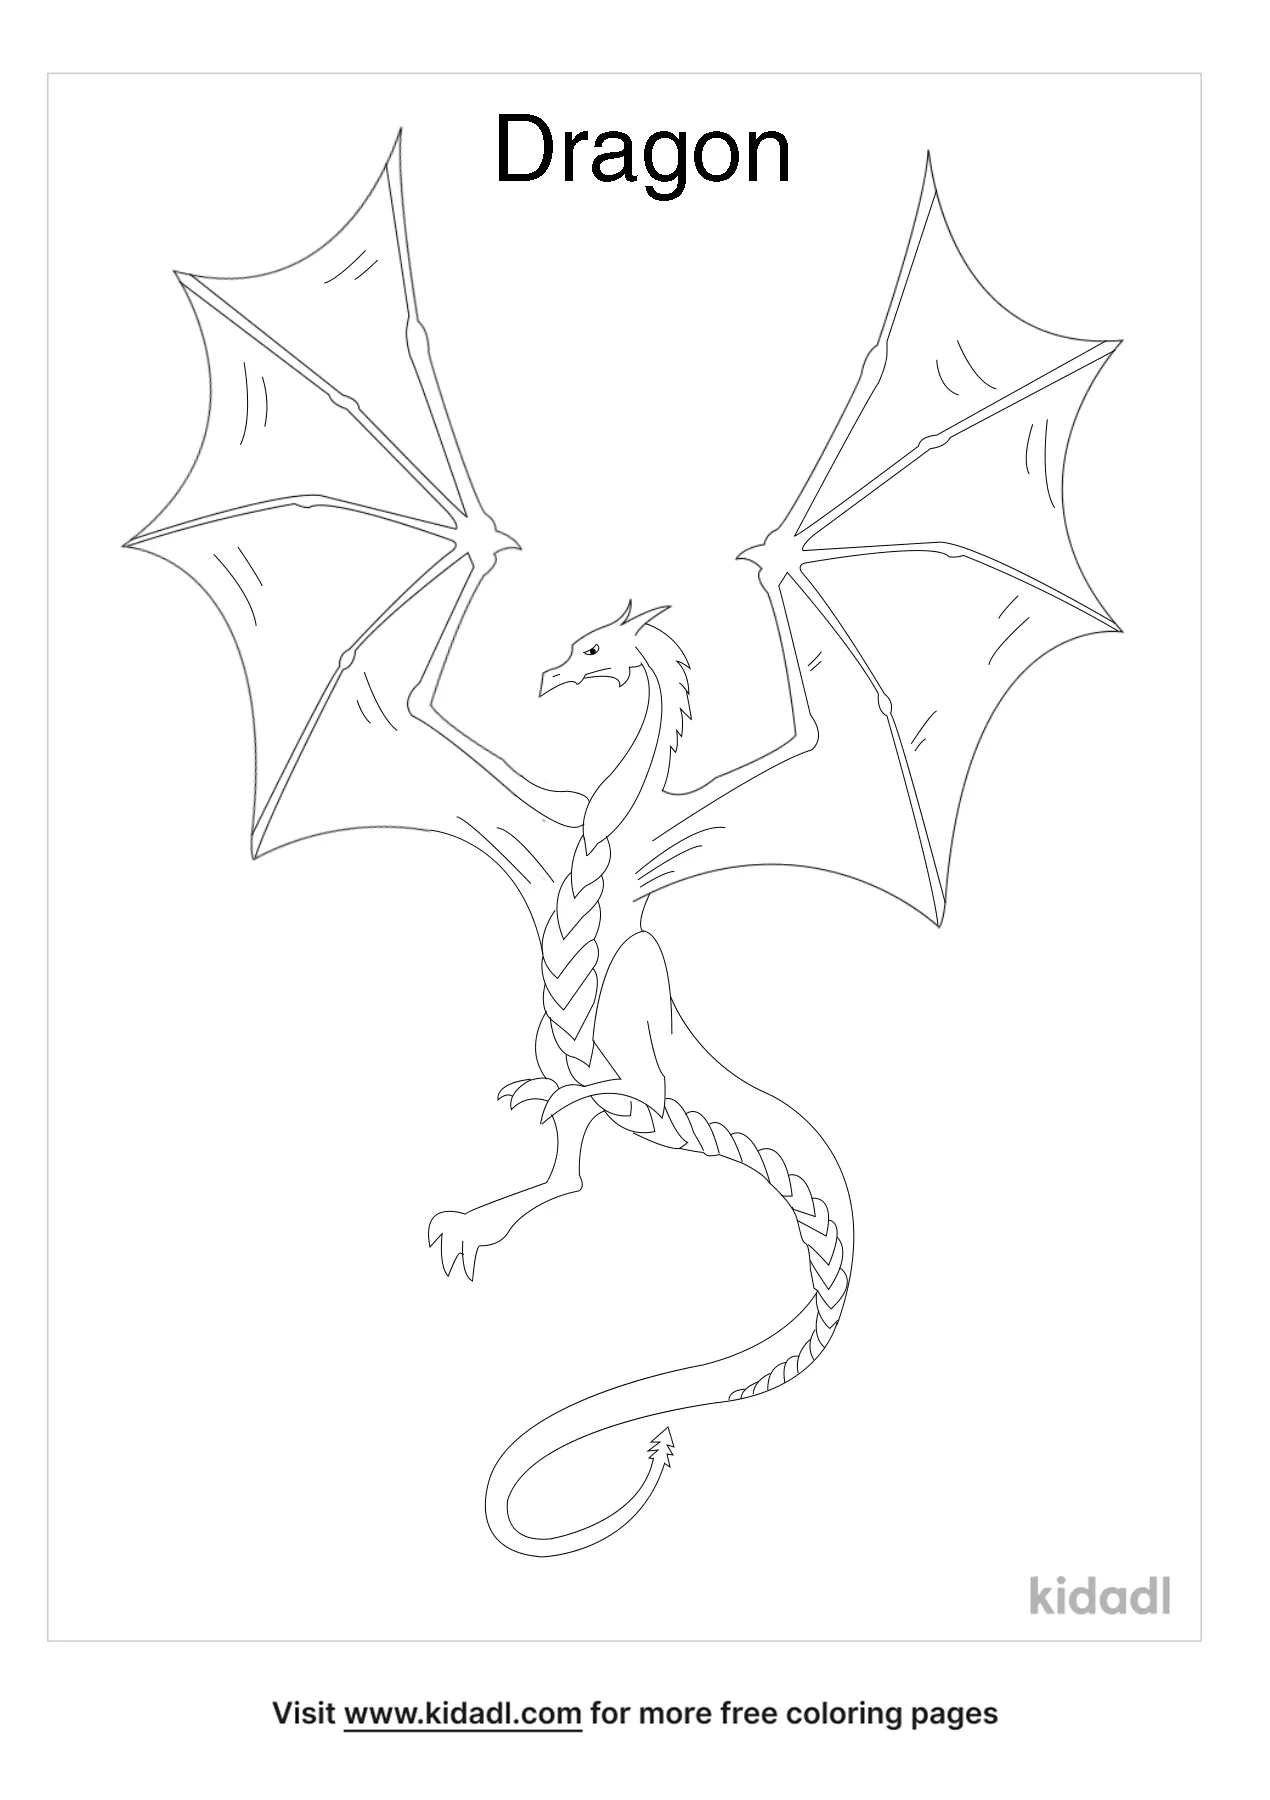 Free Realistic Dragon Coloring Page Coloring Page Printables Kidadl